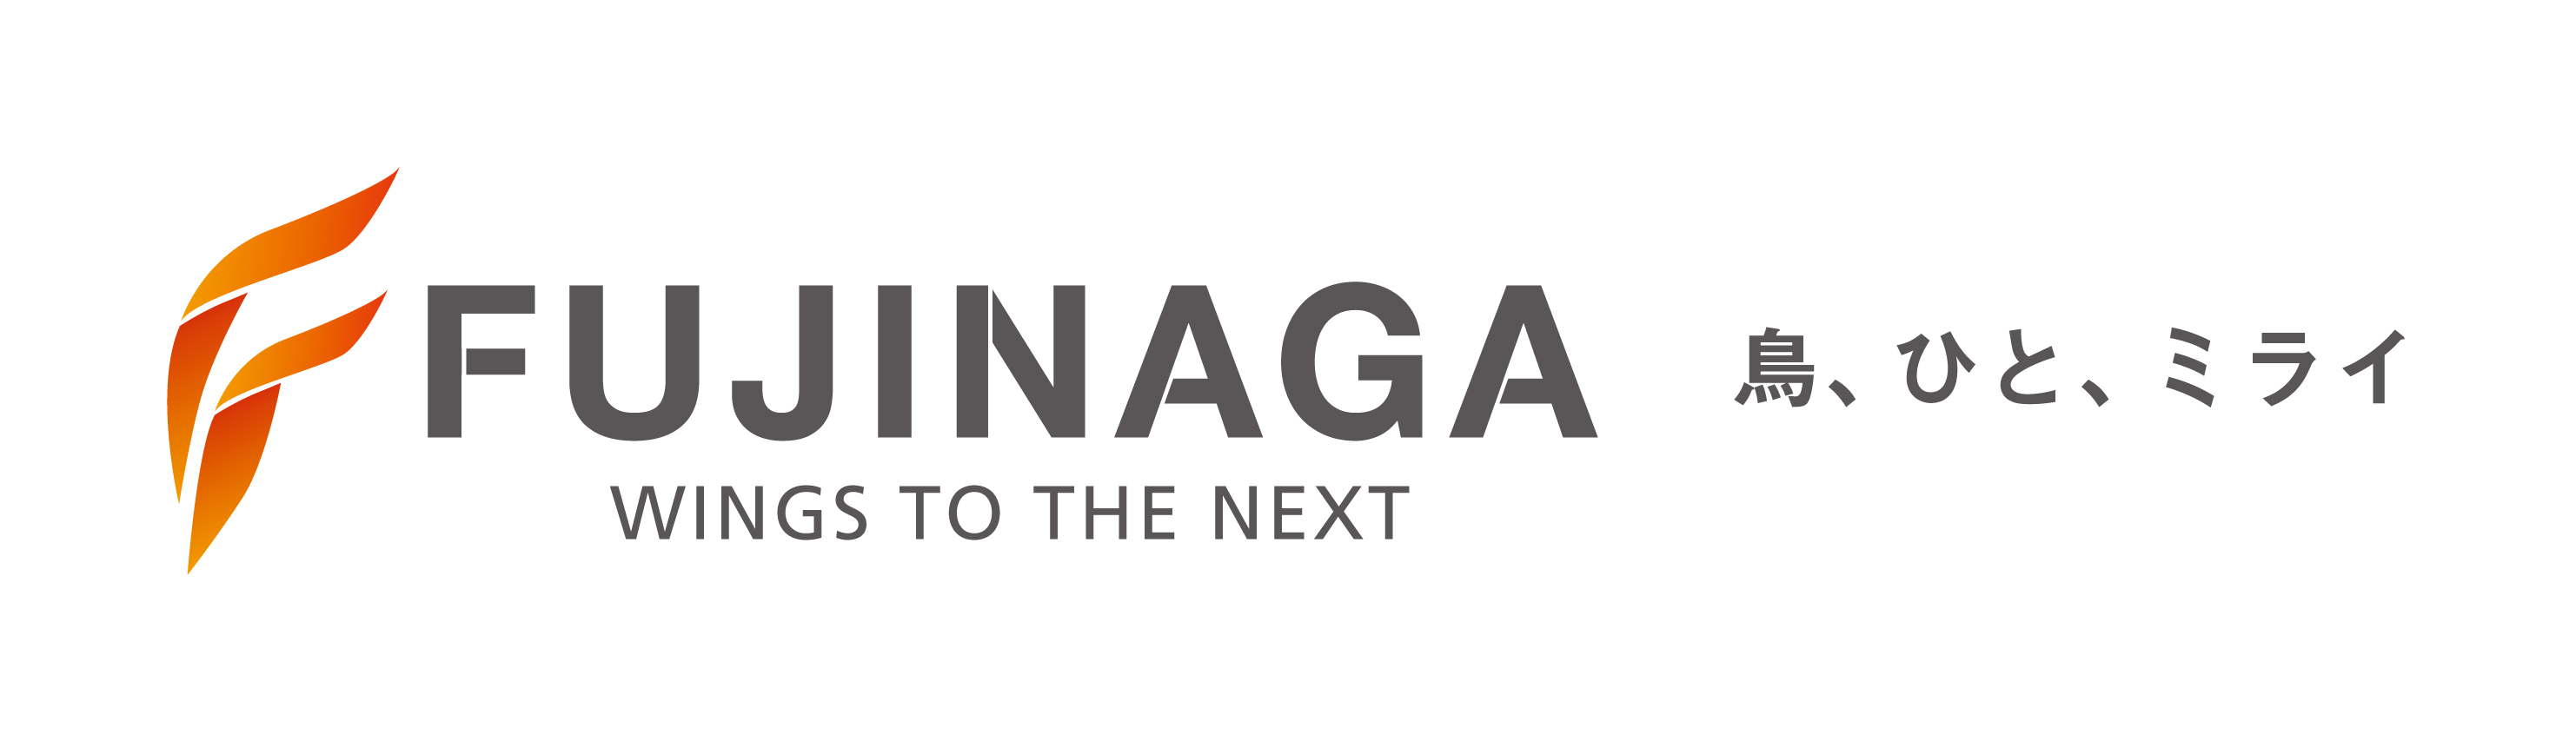 FIJINAGA WINGS TO THE NEXT